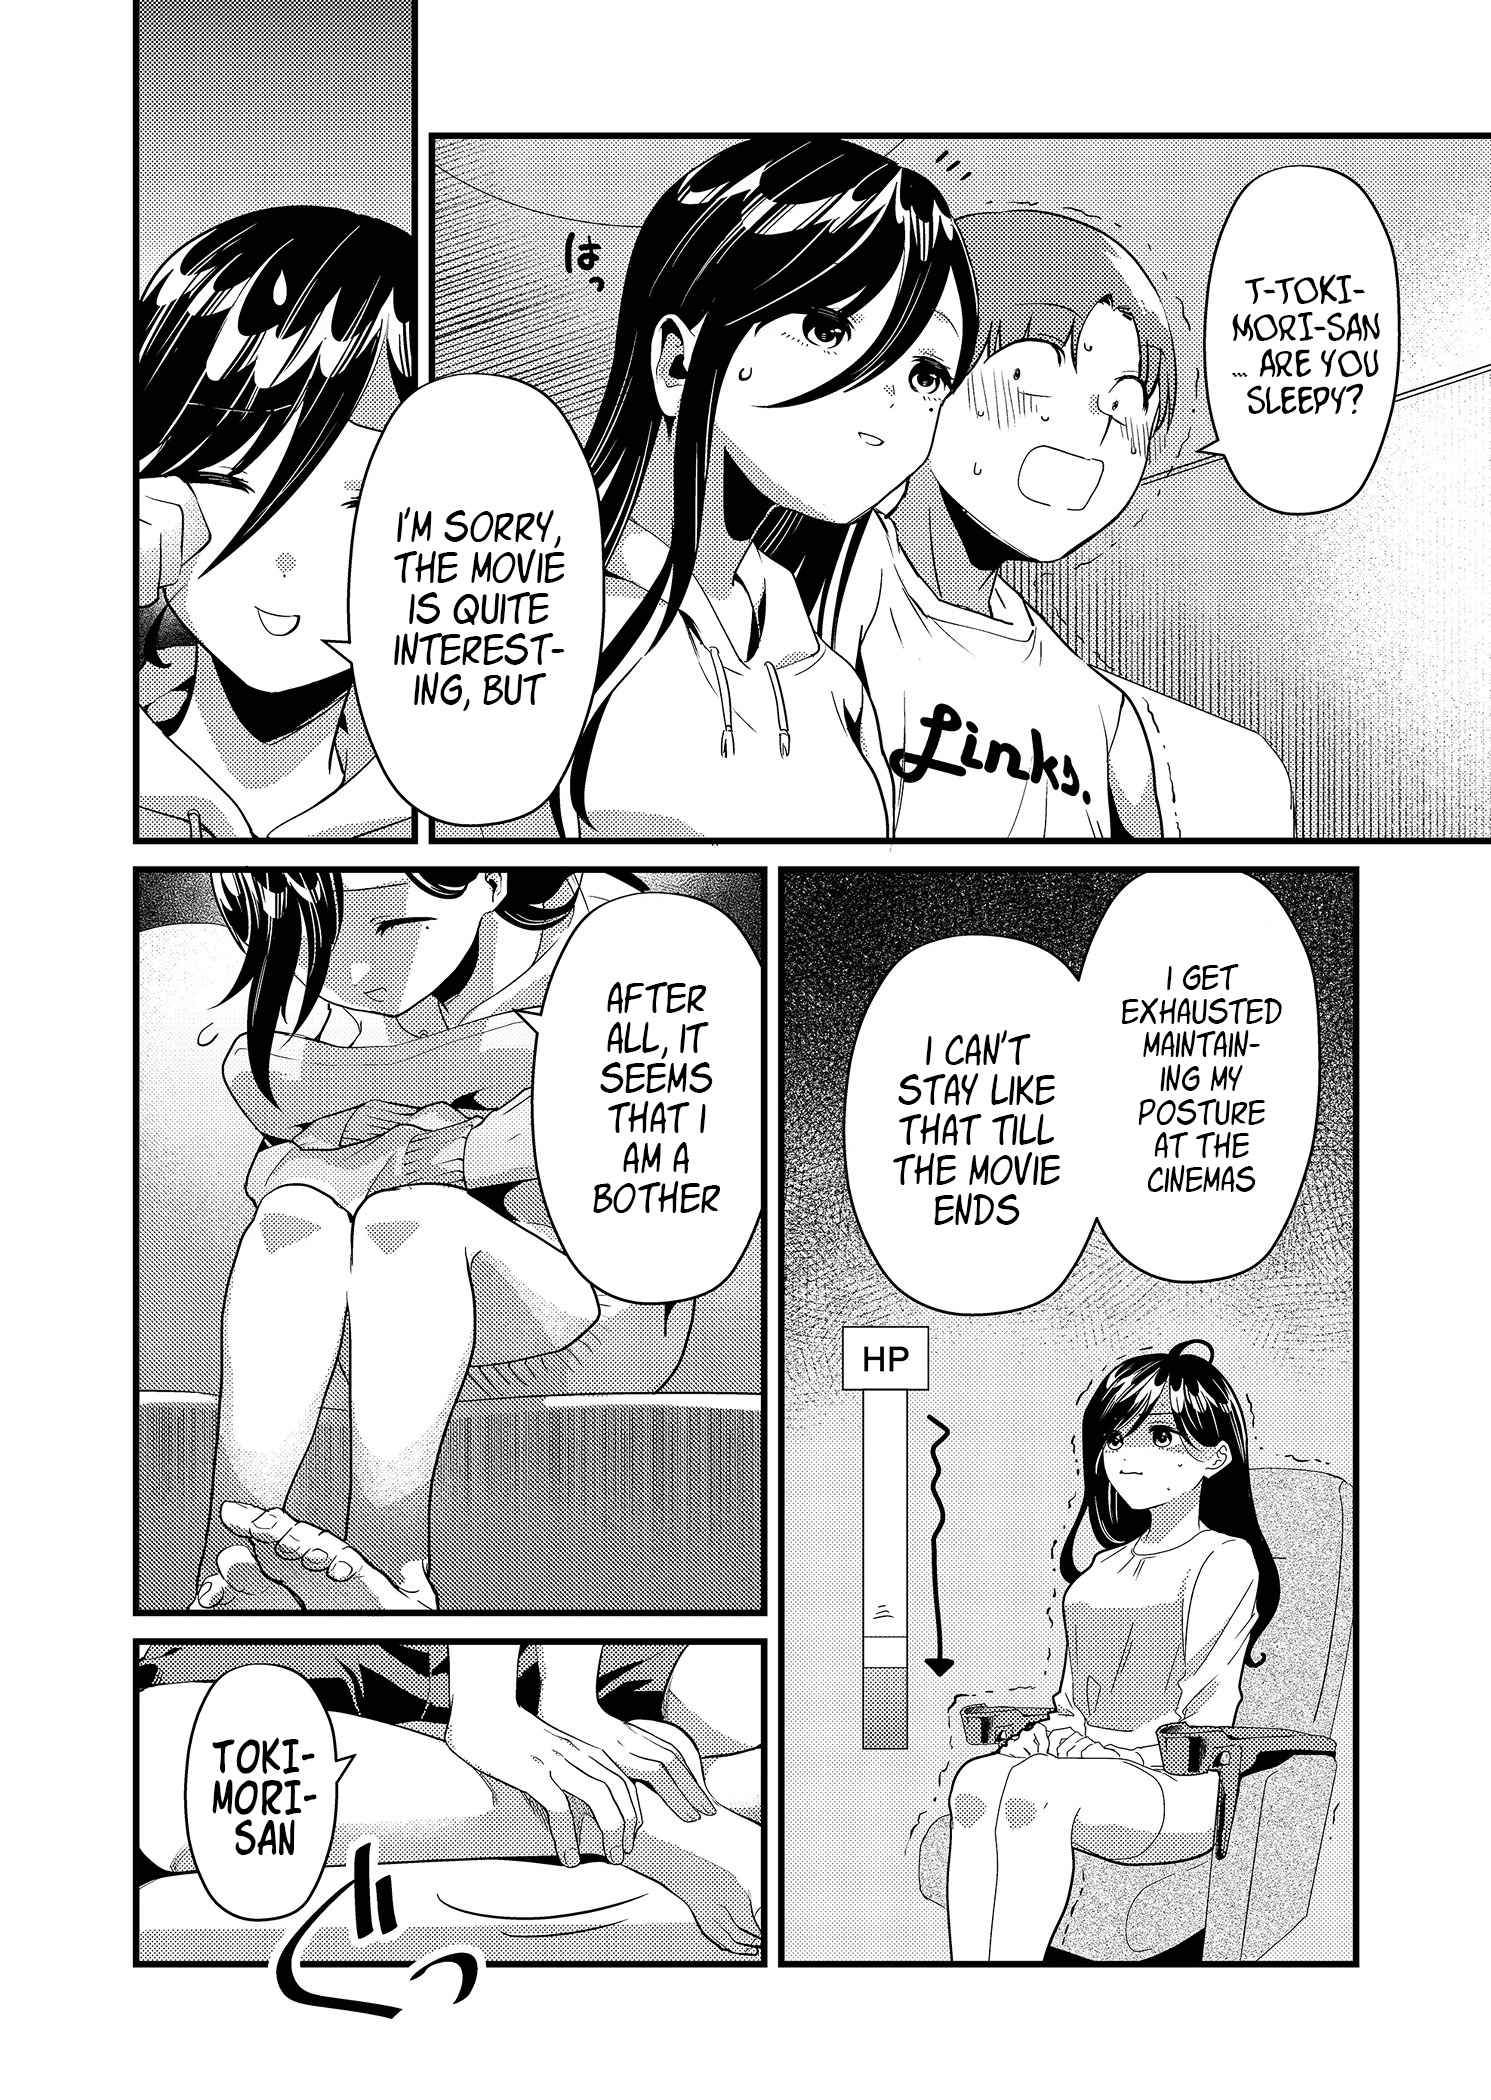 Tokimari-san is Completely Defenseless!! Chapter 5-eng-li - Page 8